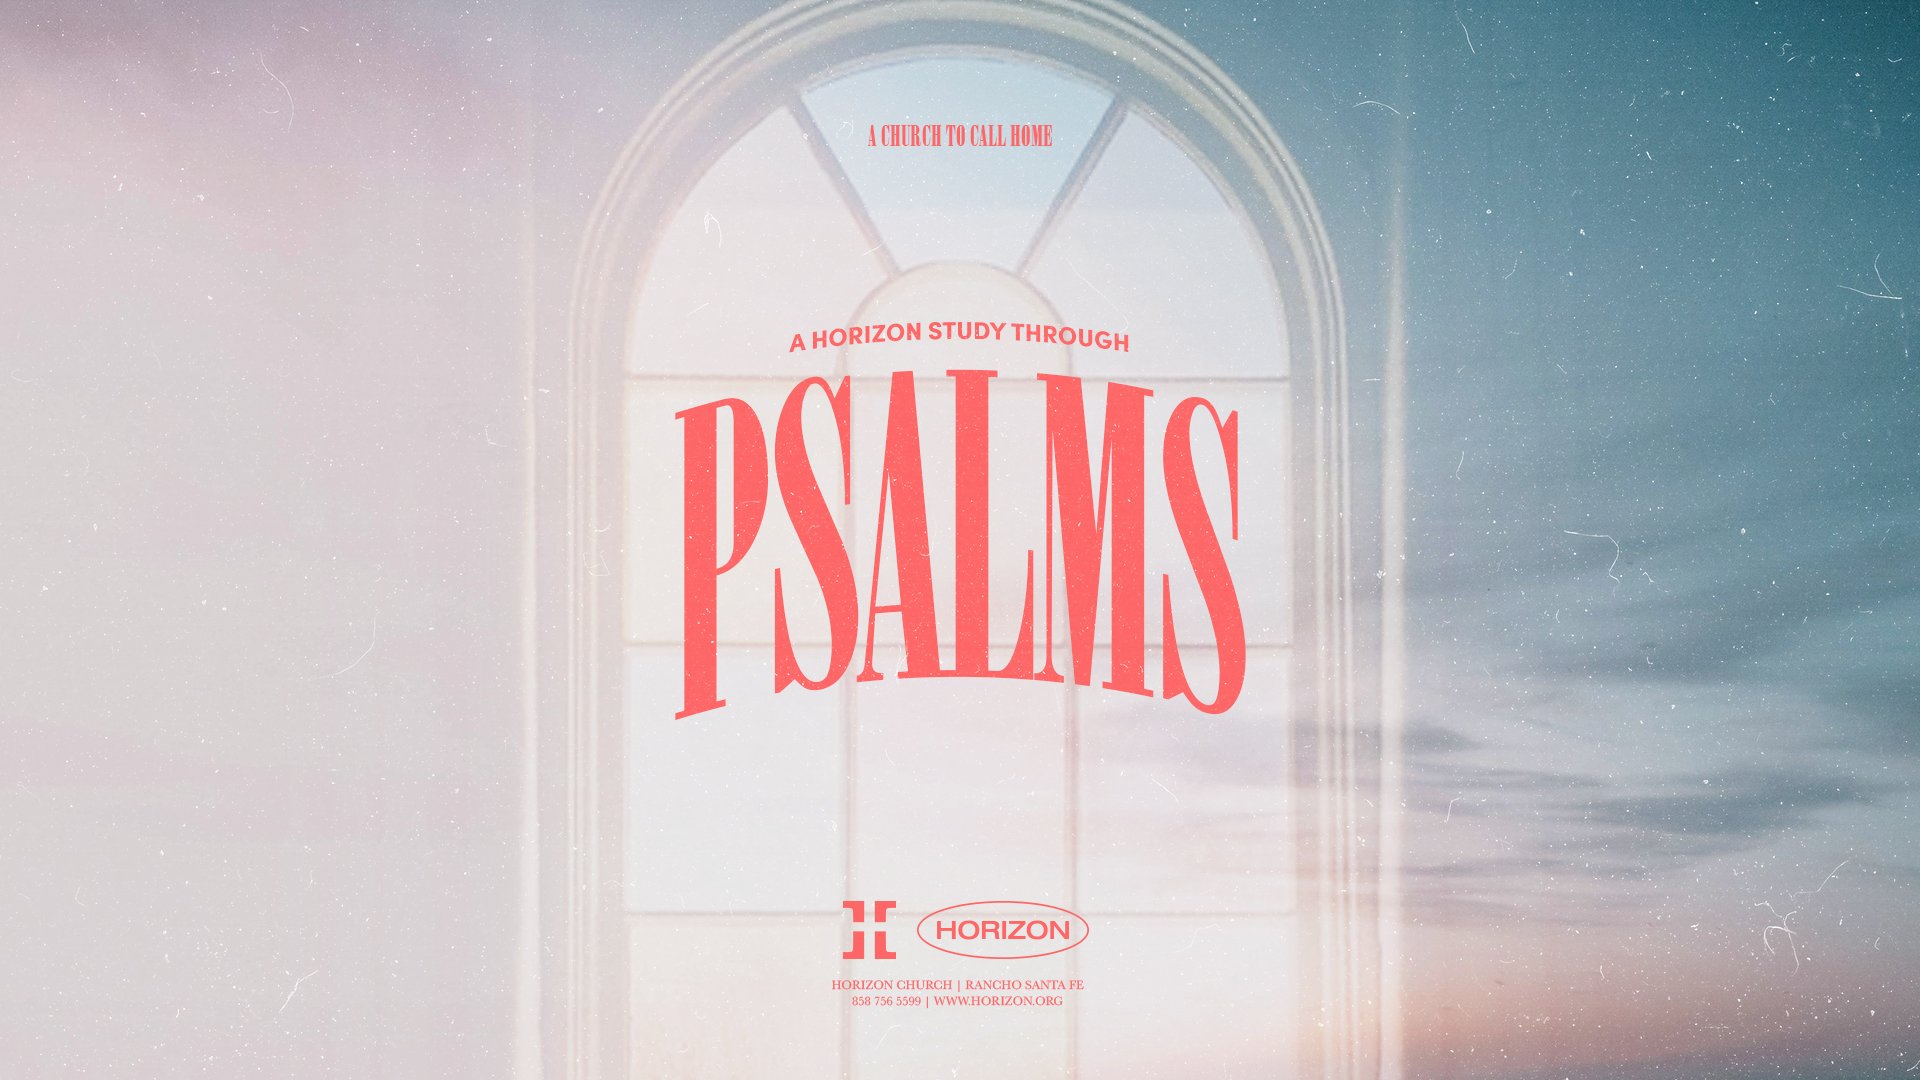 Psalms-web.jpg